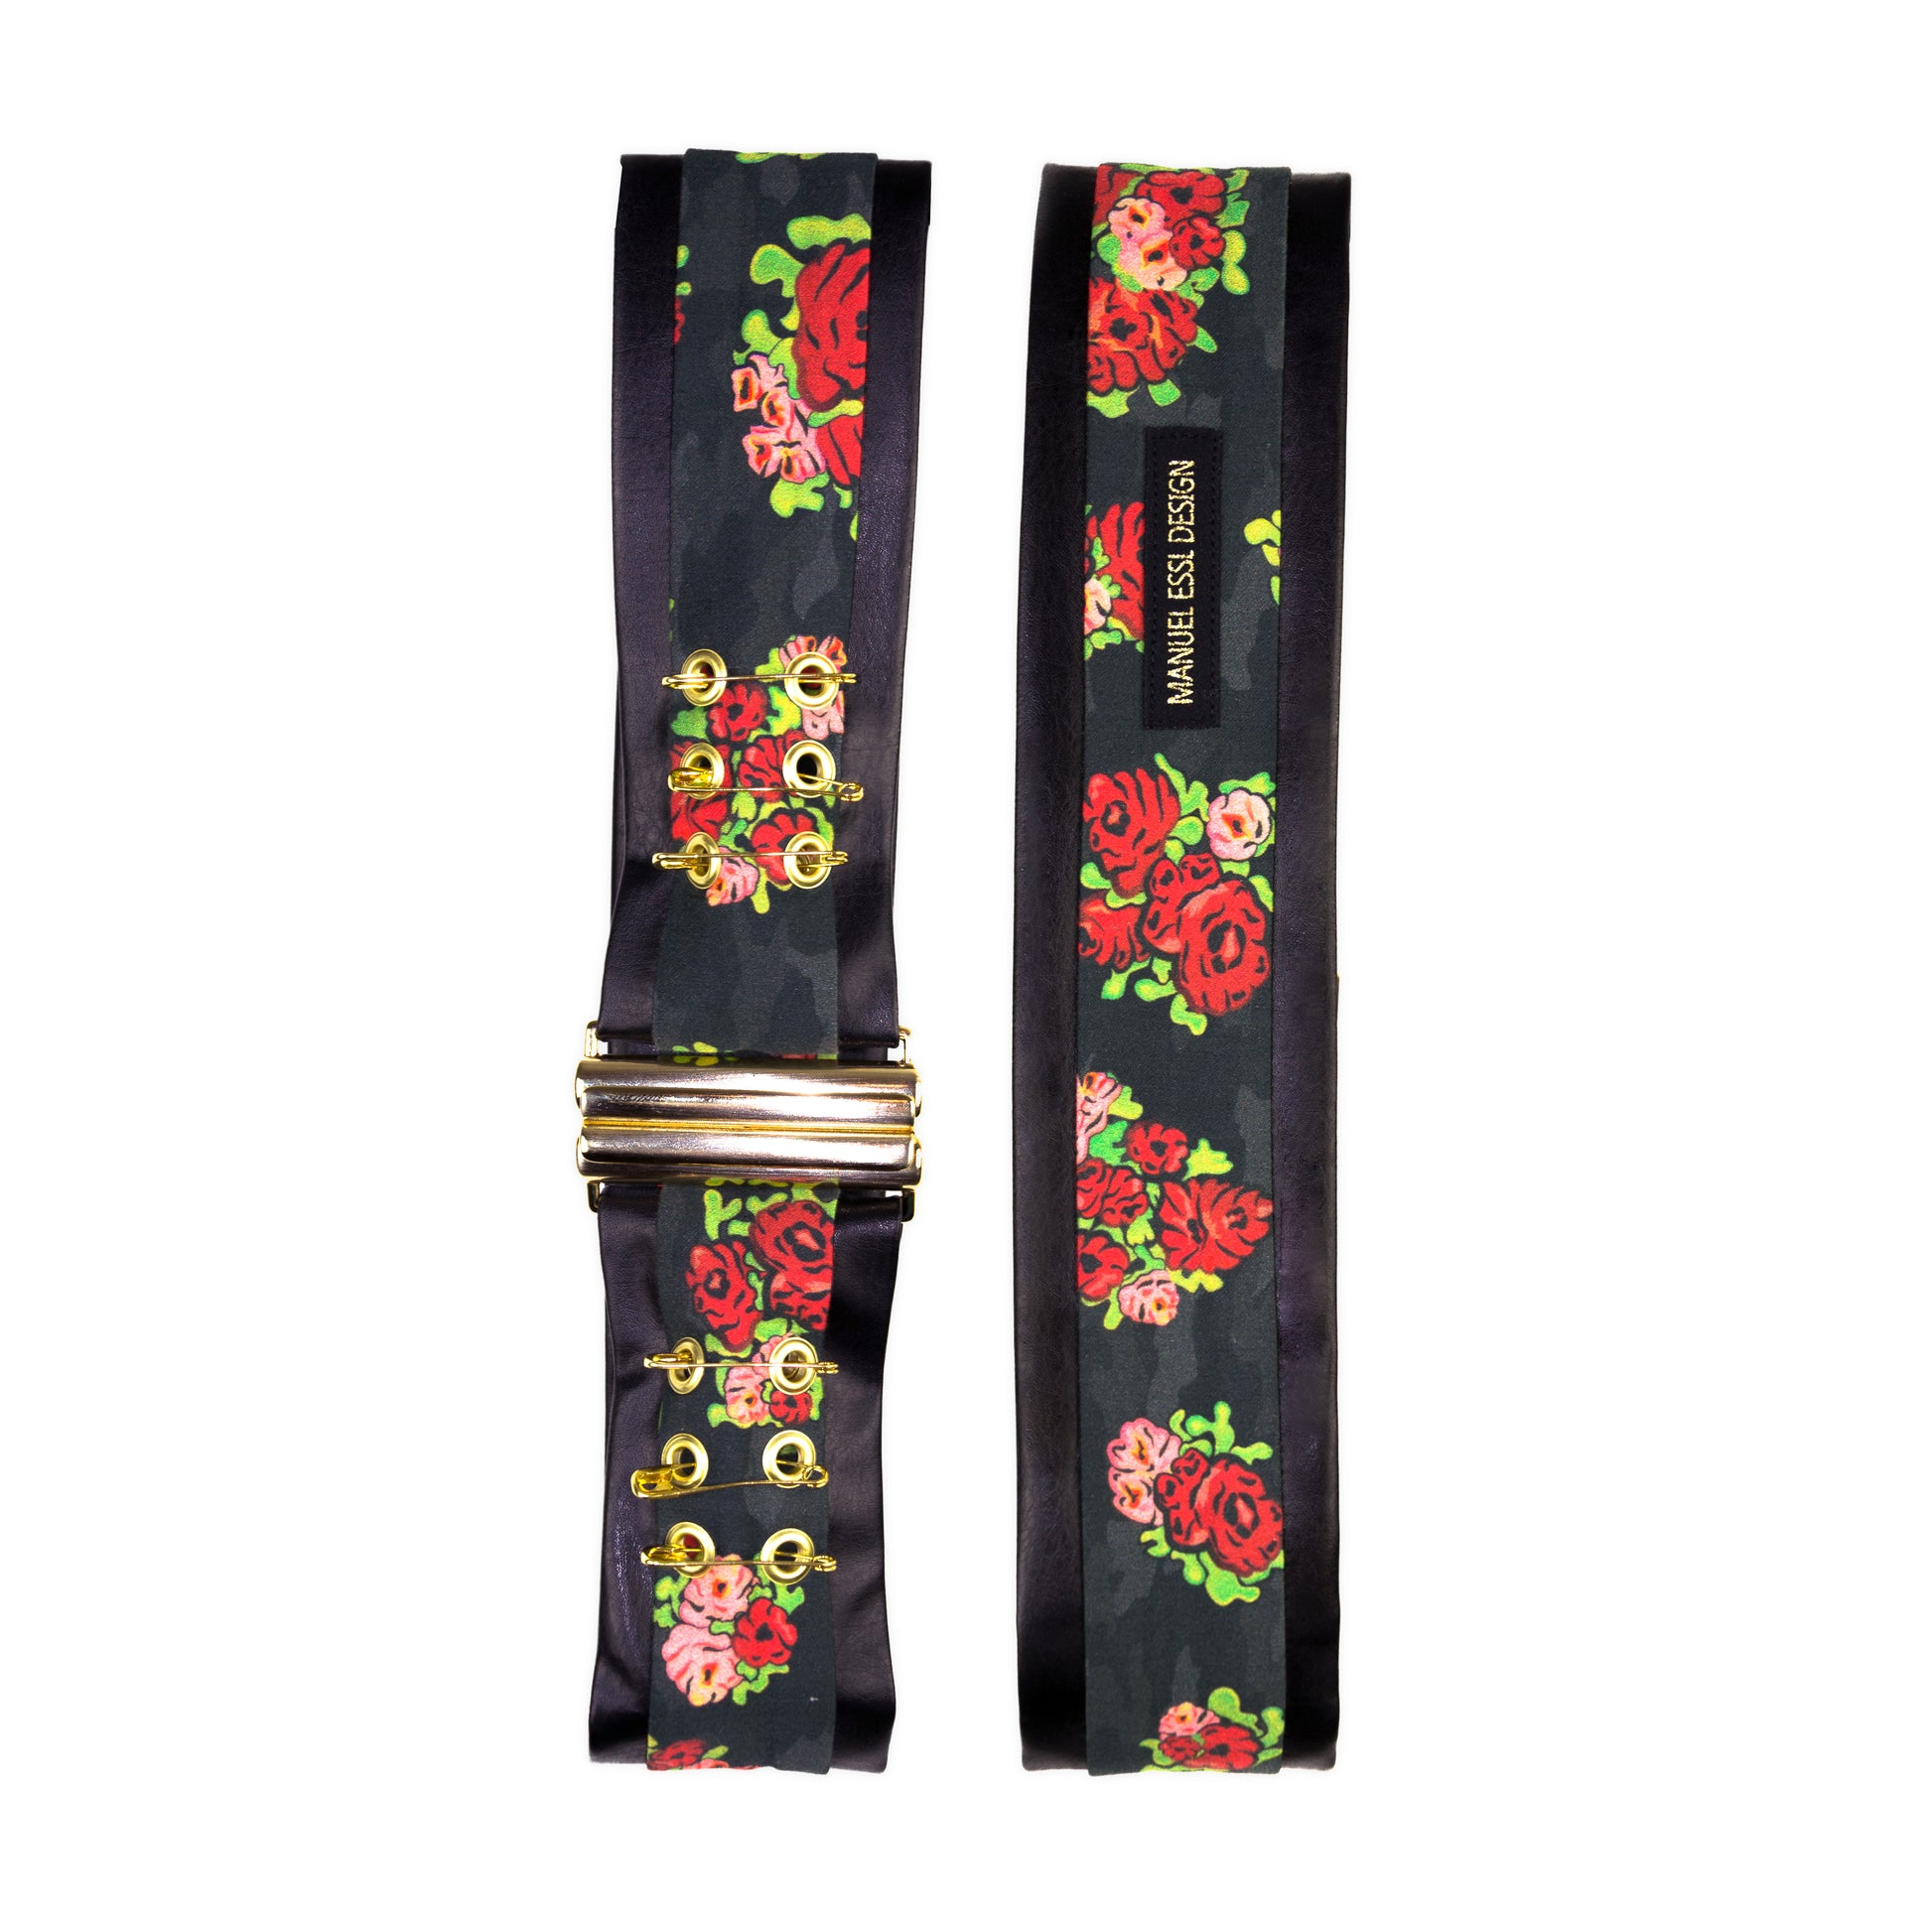 Waist Belt with Safety Pin Fastening - Black - Manuel Essl Design